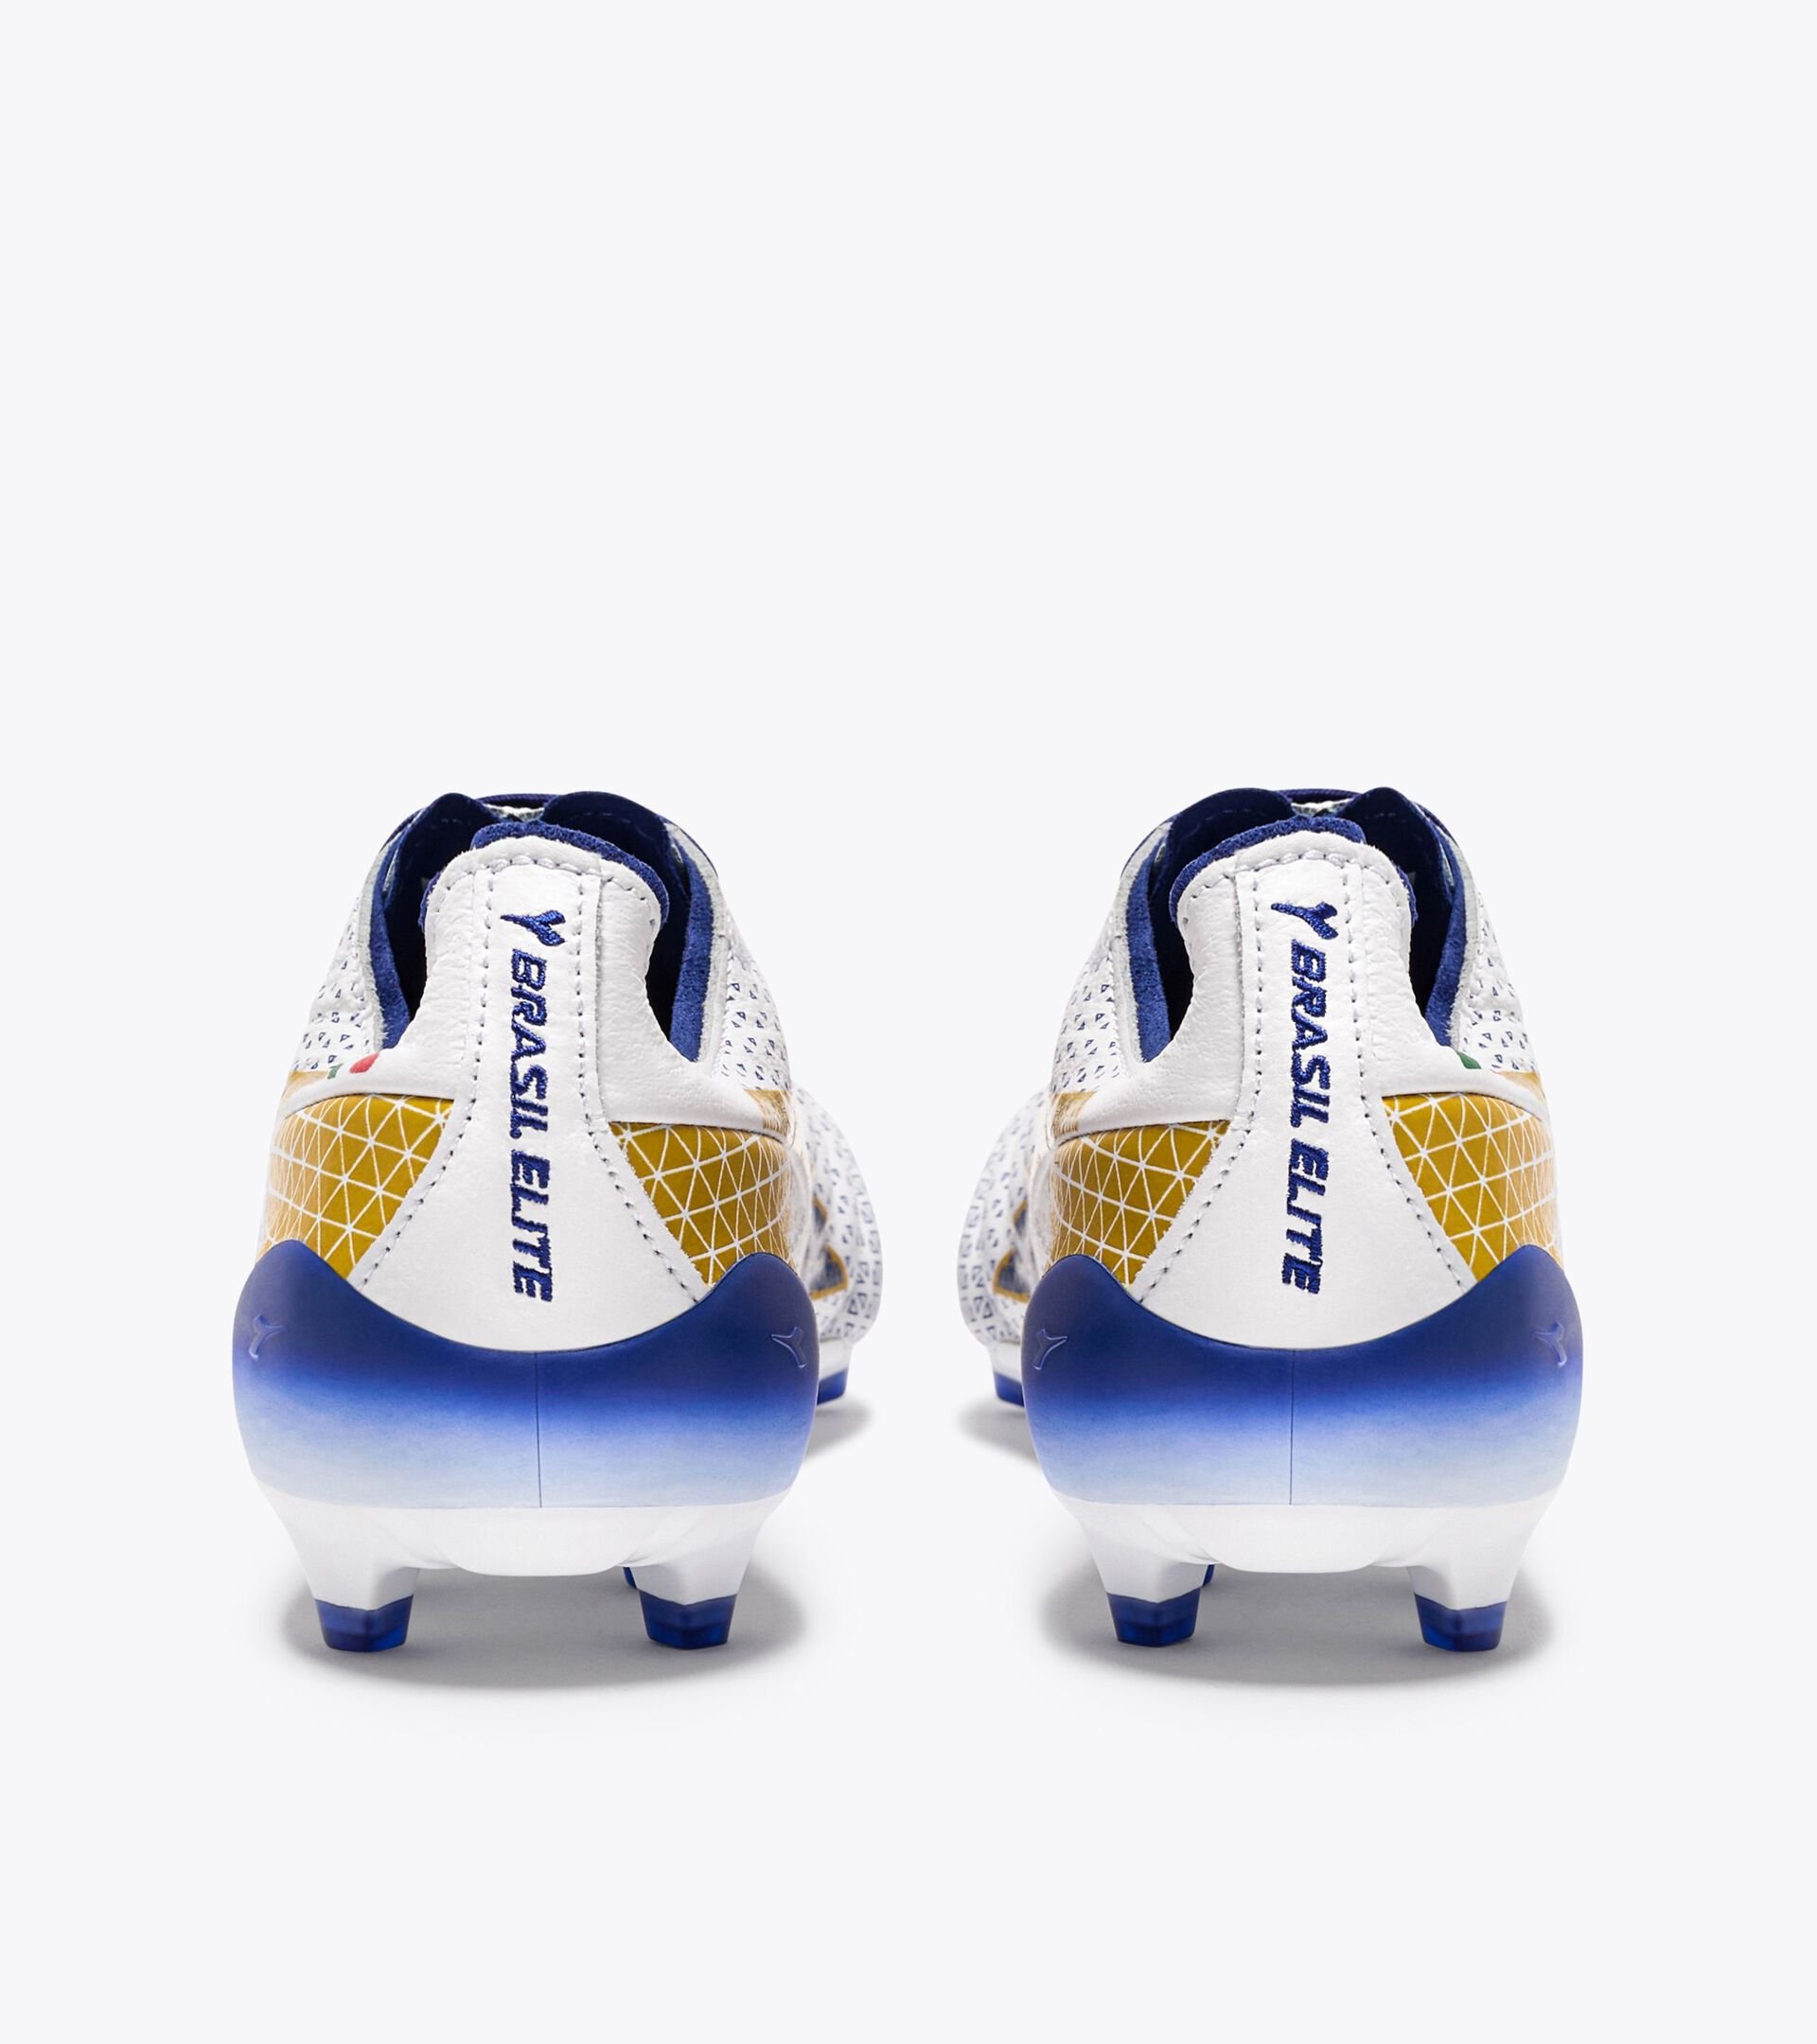 Calcio boots for firm grounds - Made in Italy - Gender Neutral BRASIL ELITE TECH GR ITA LPX WHITE/MAZARINE BLUE/GOLD - Diadora